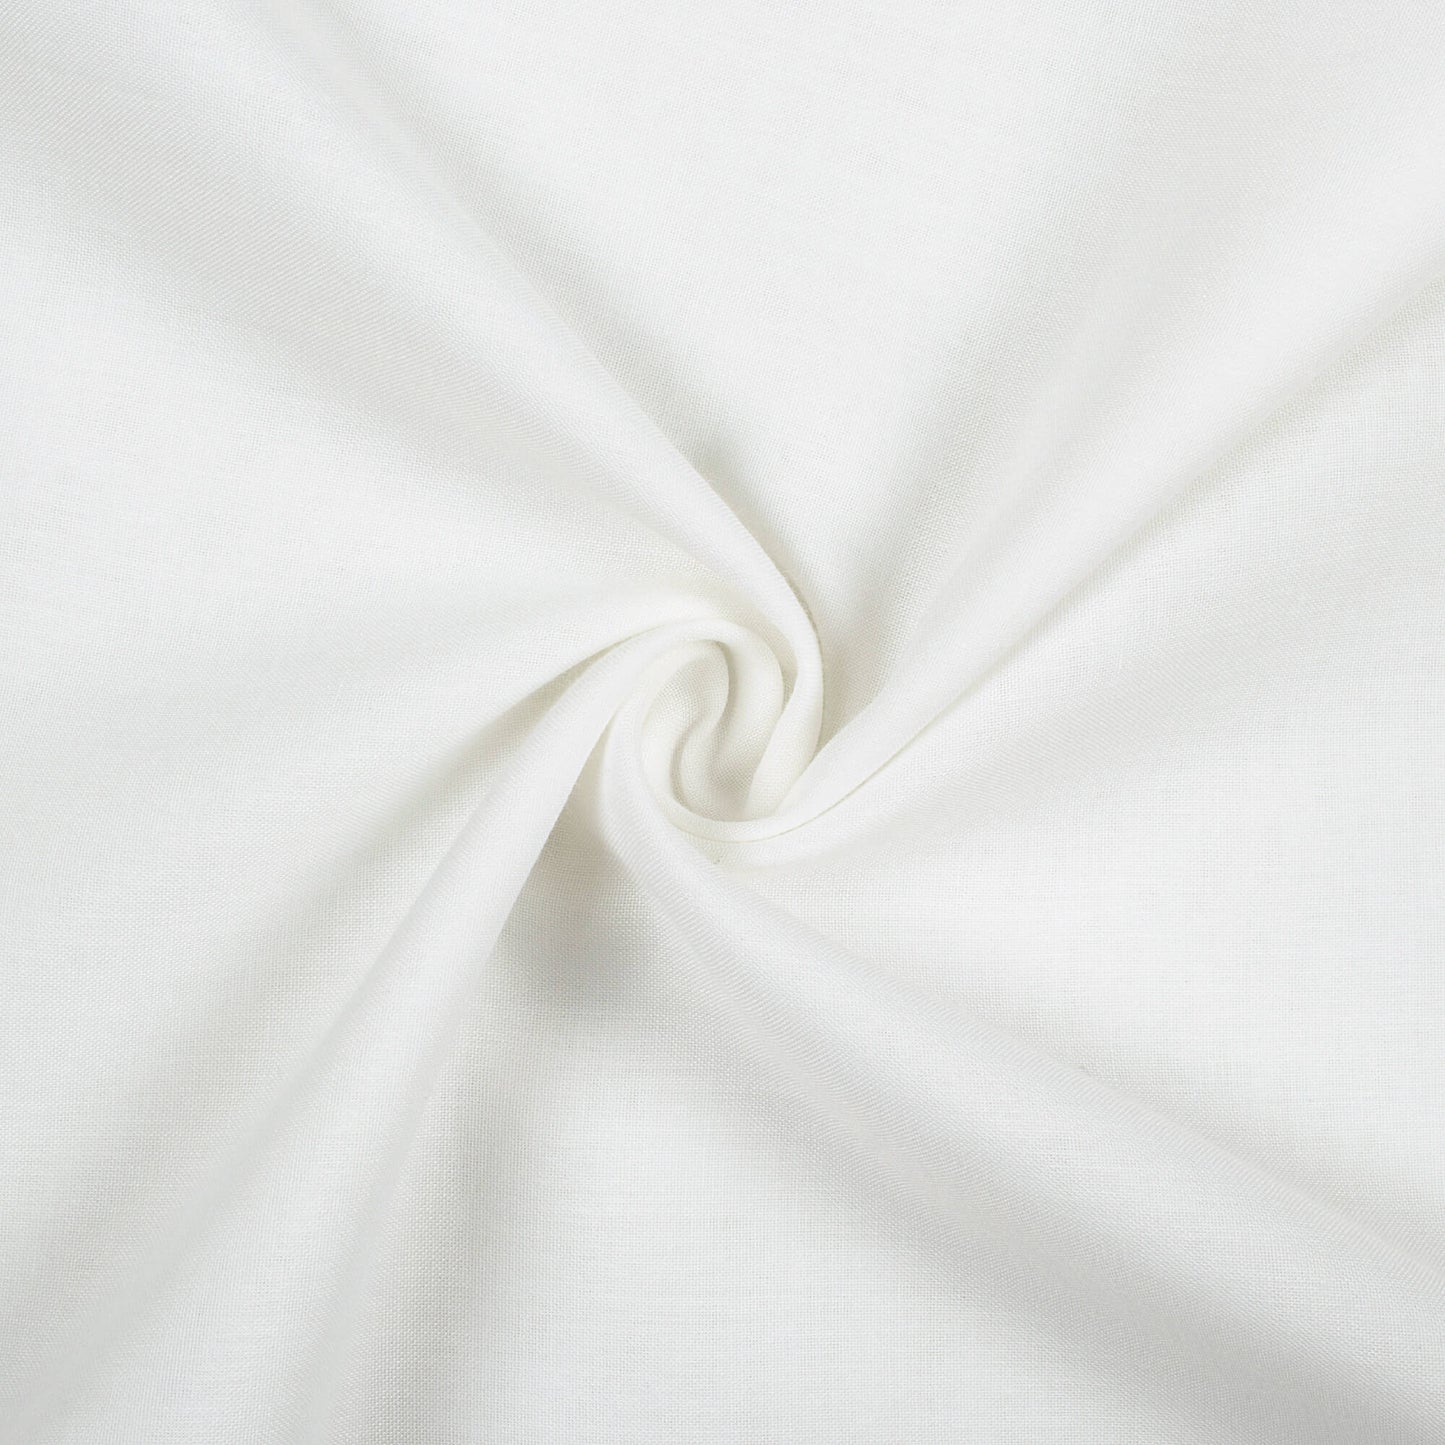 White Plain Poly Rayon Fabric